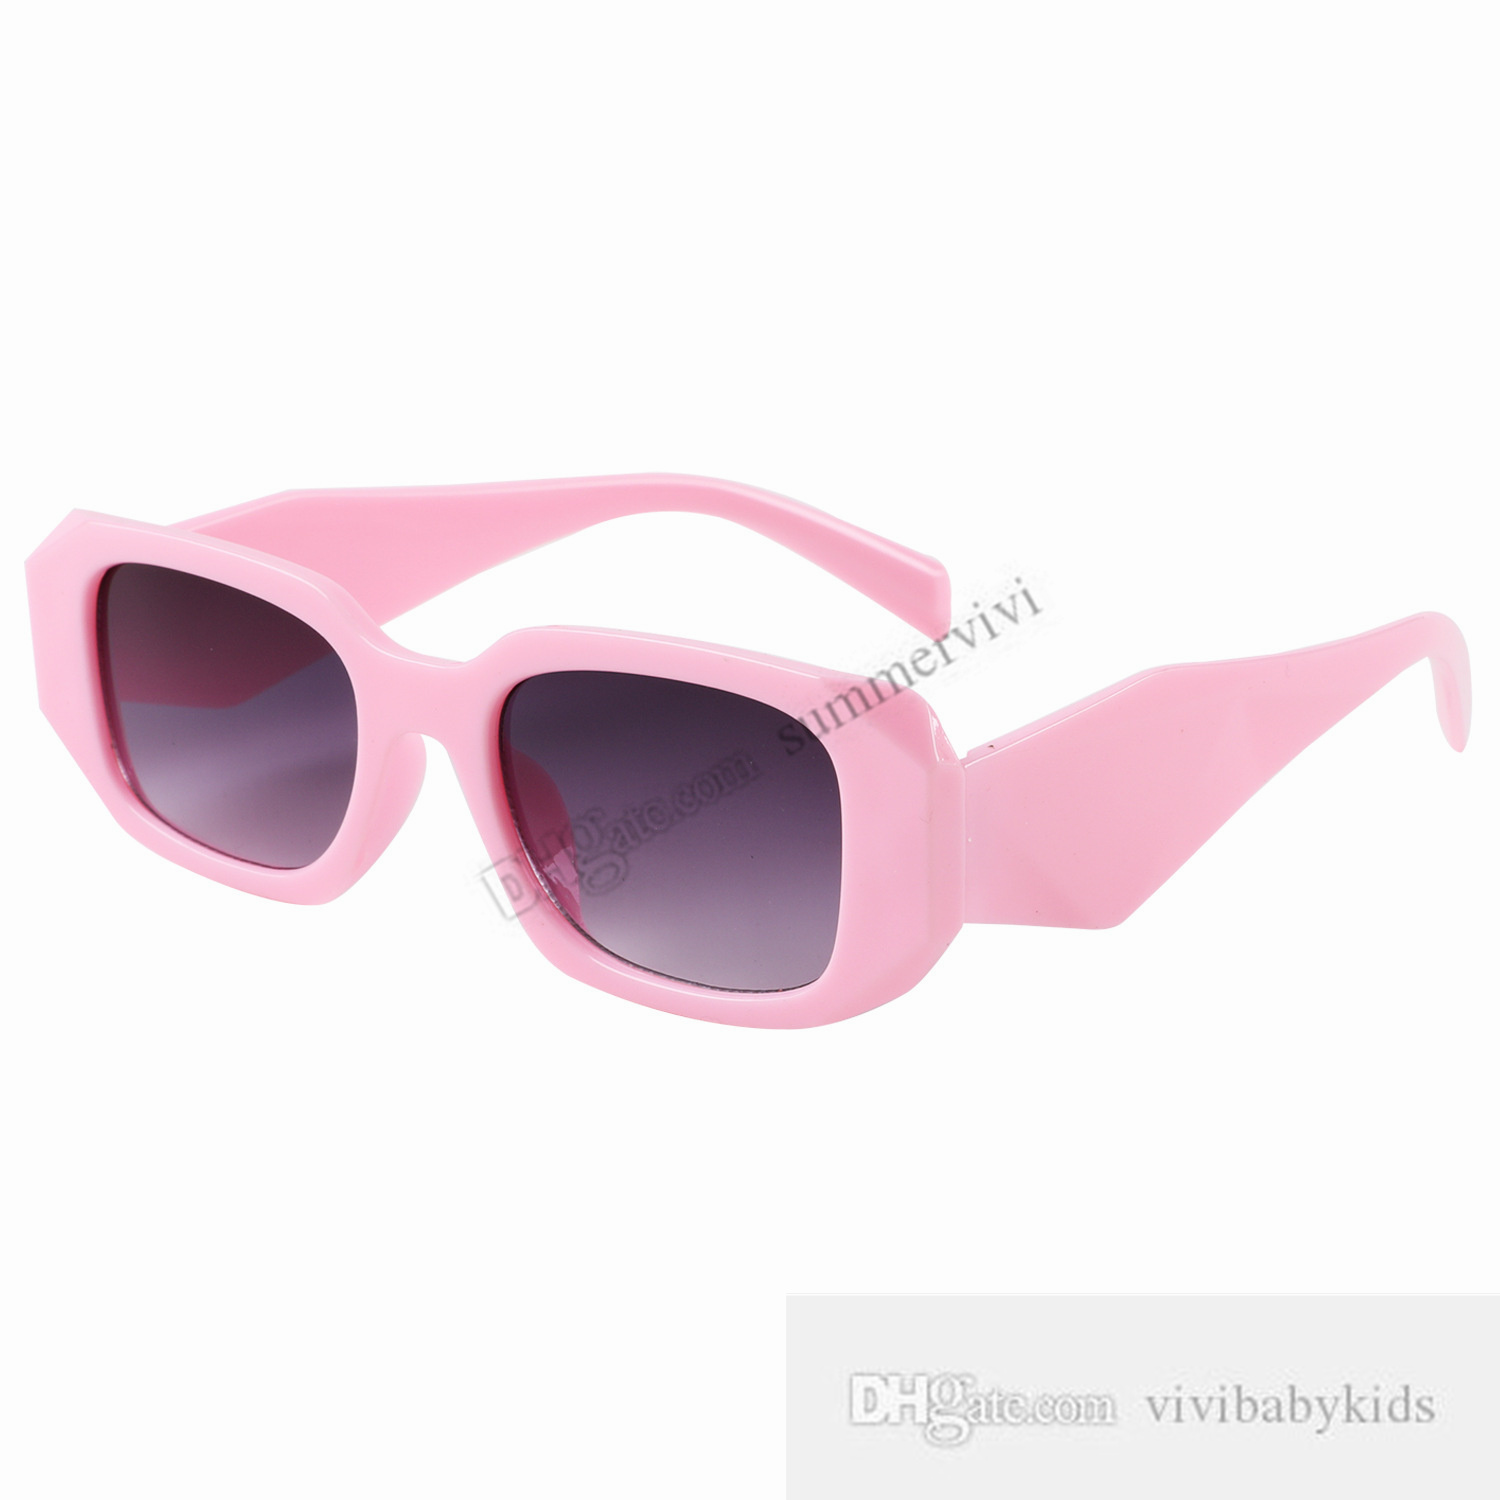 Moda Niños gafas de sol niñas marco triangular gafas de sol piloto verano niños Uv 400 gafas niños playa bloqueador solar sombra S0873